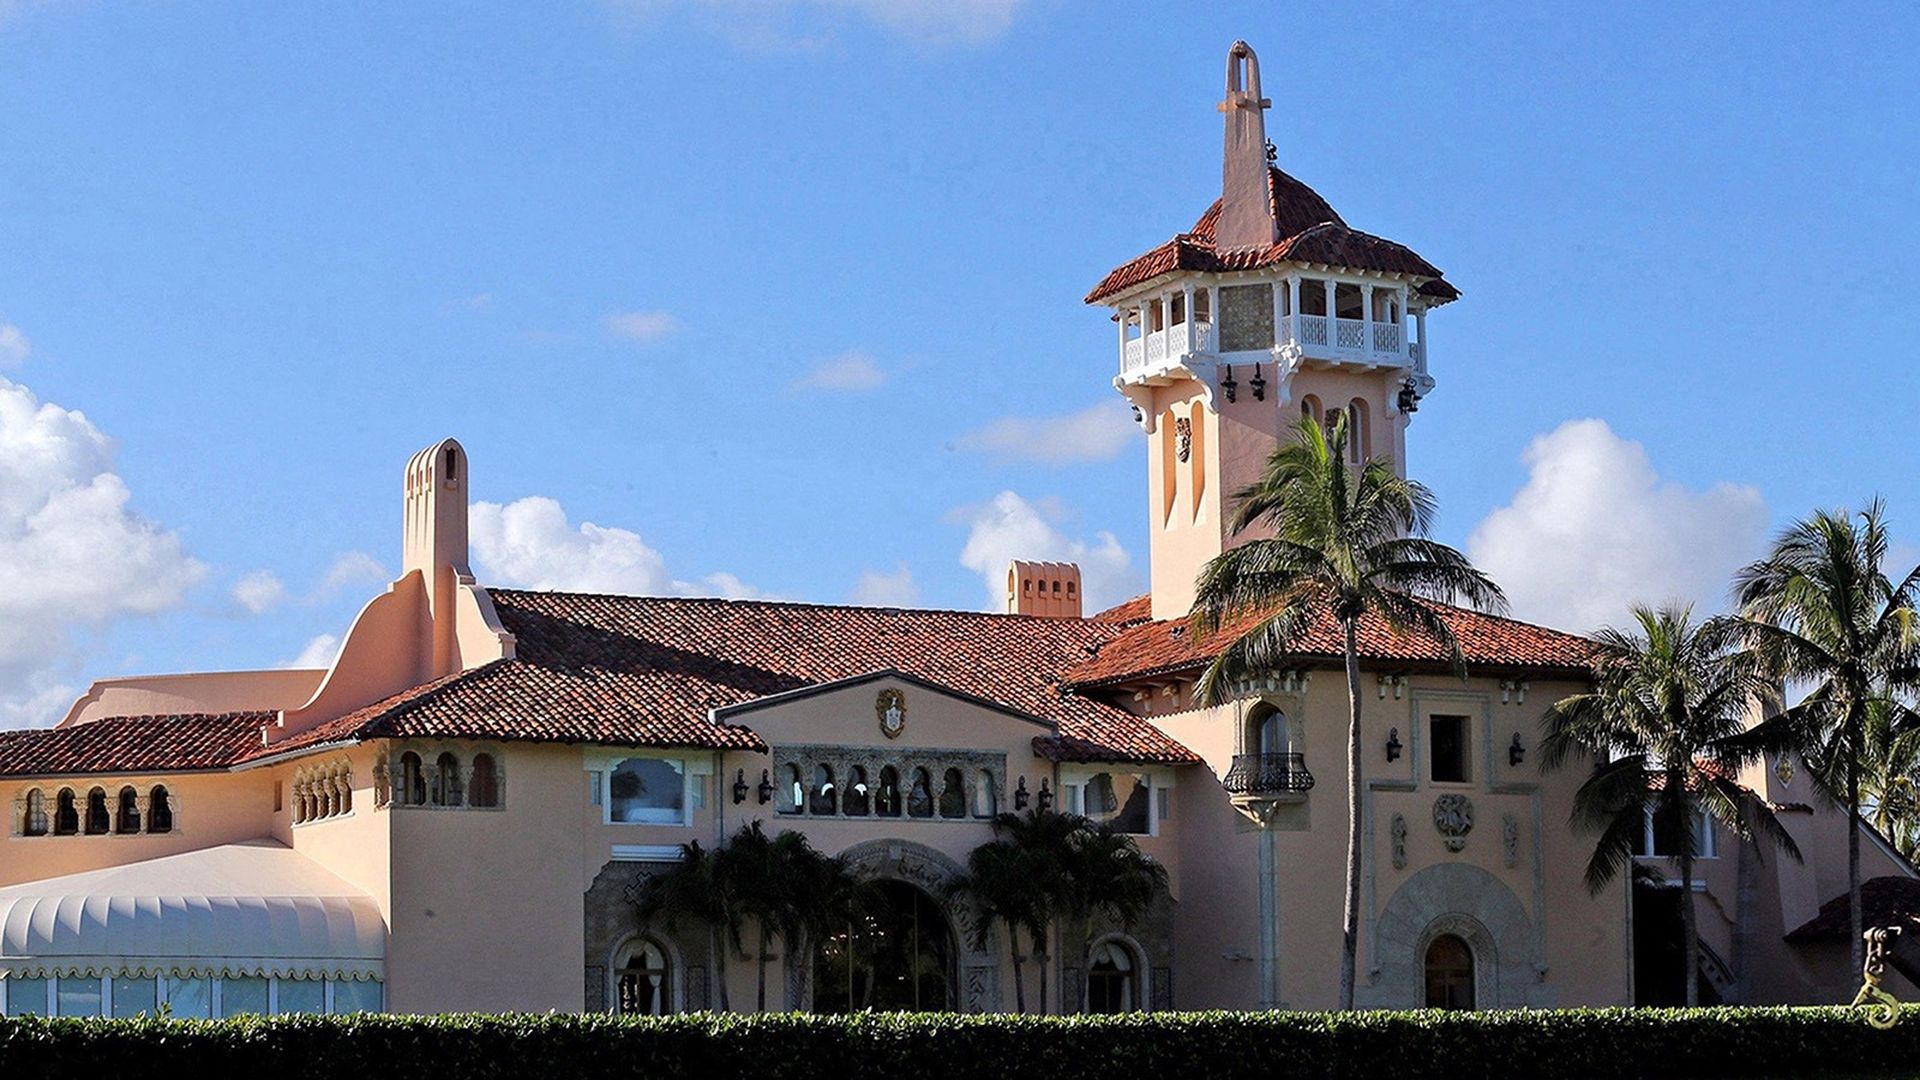 Trump's Mar-a-Lago resort in Florida.